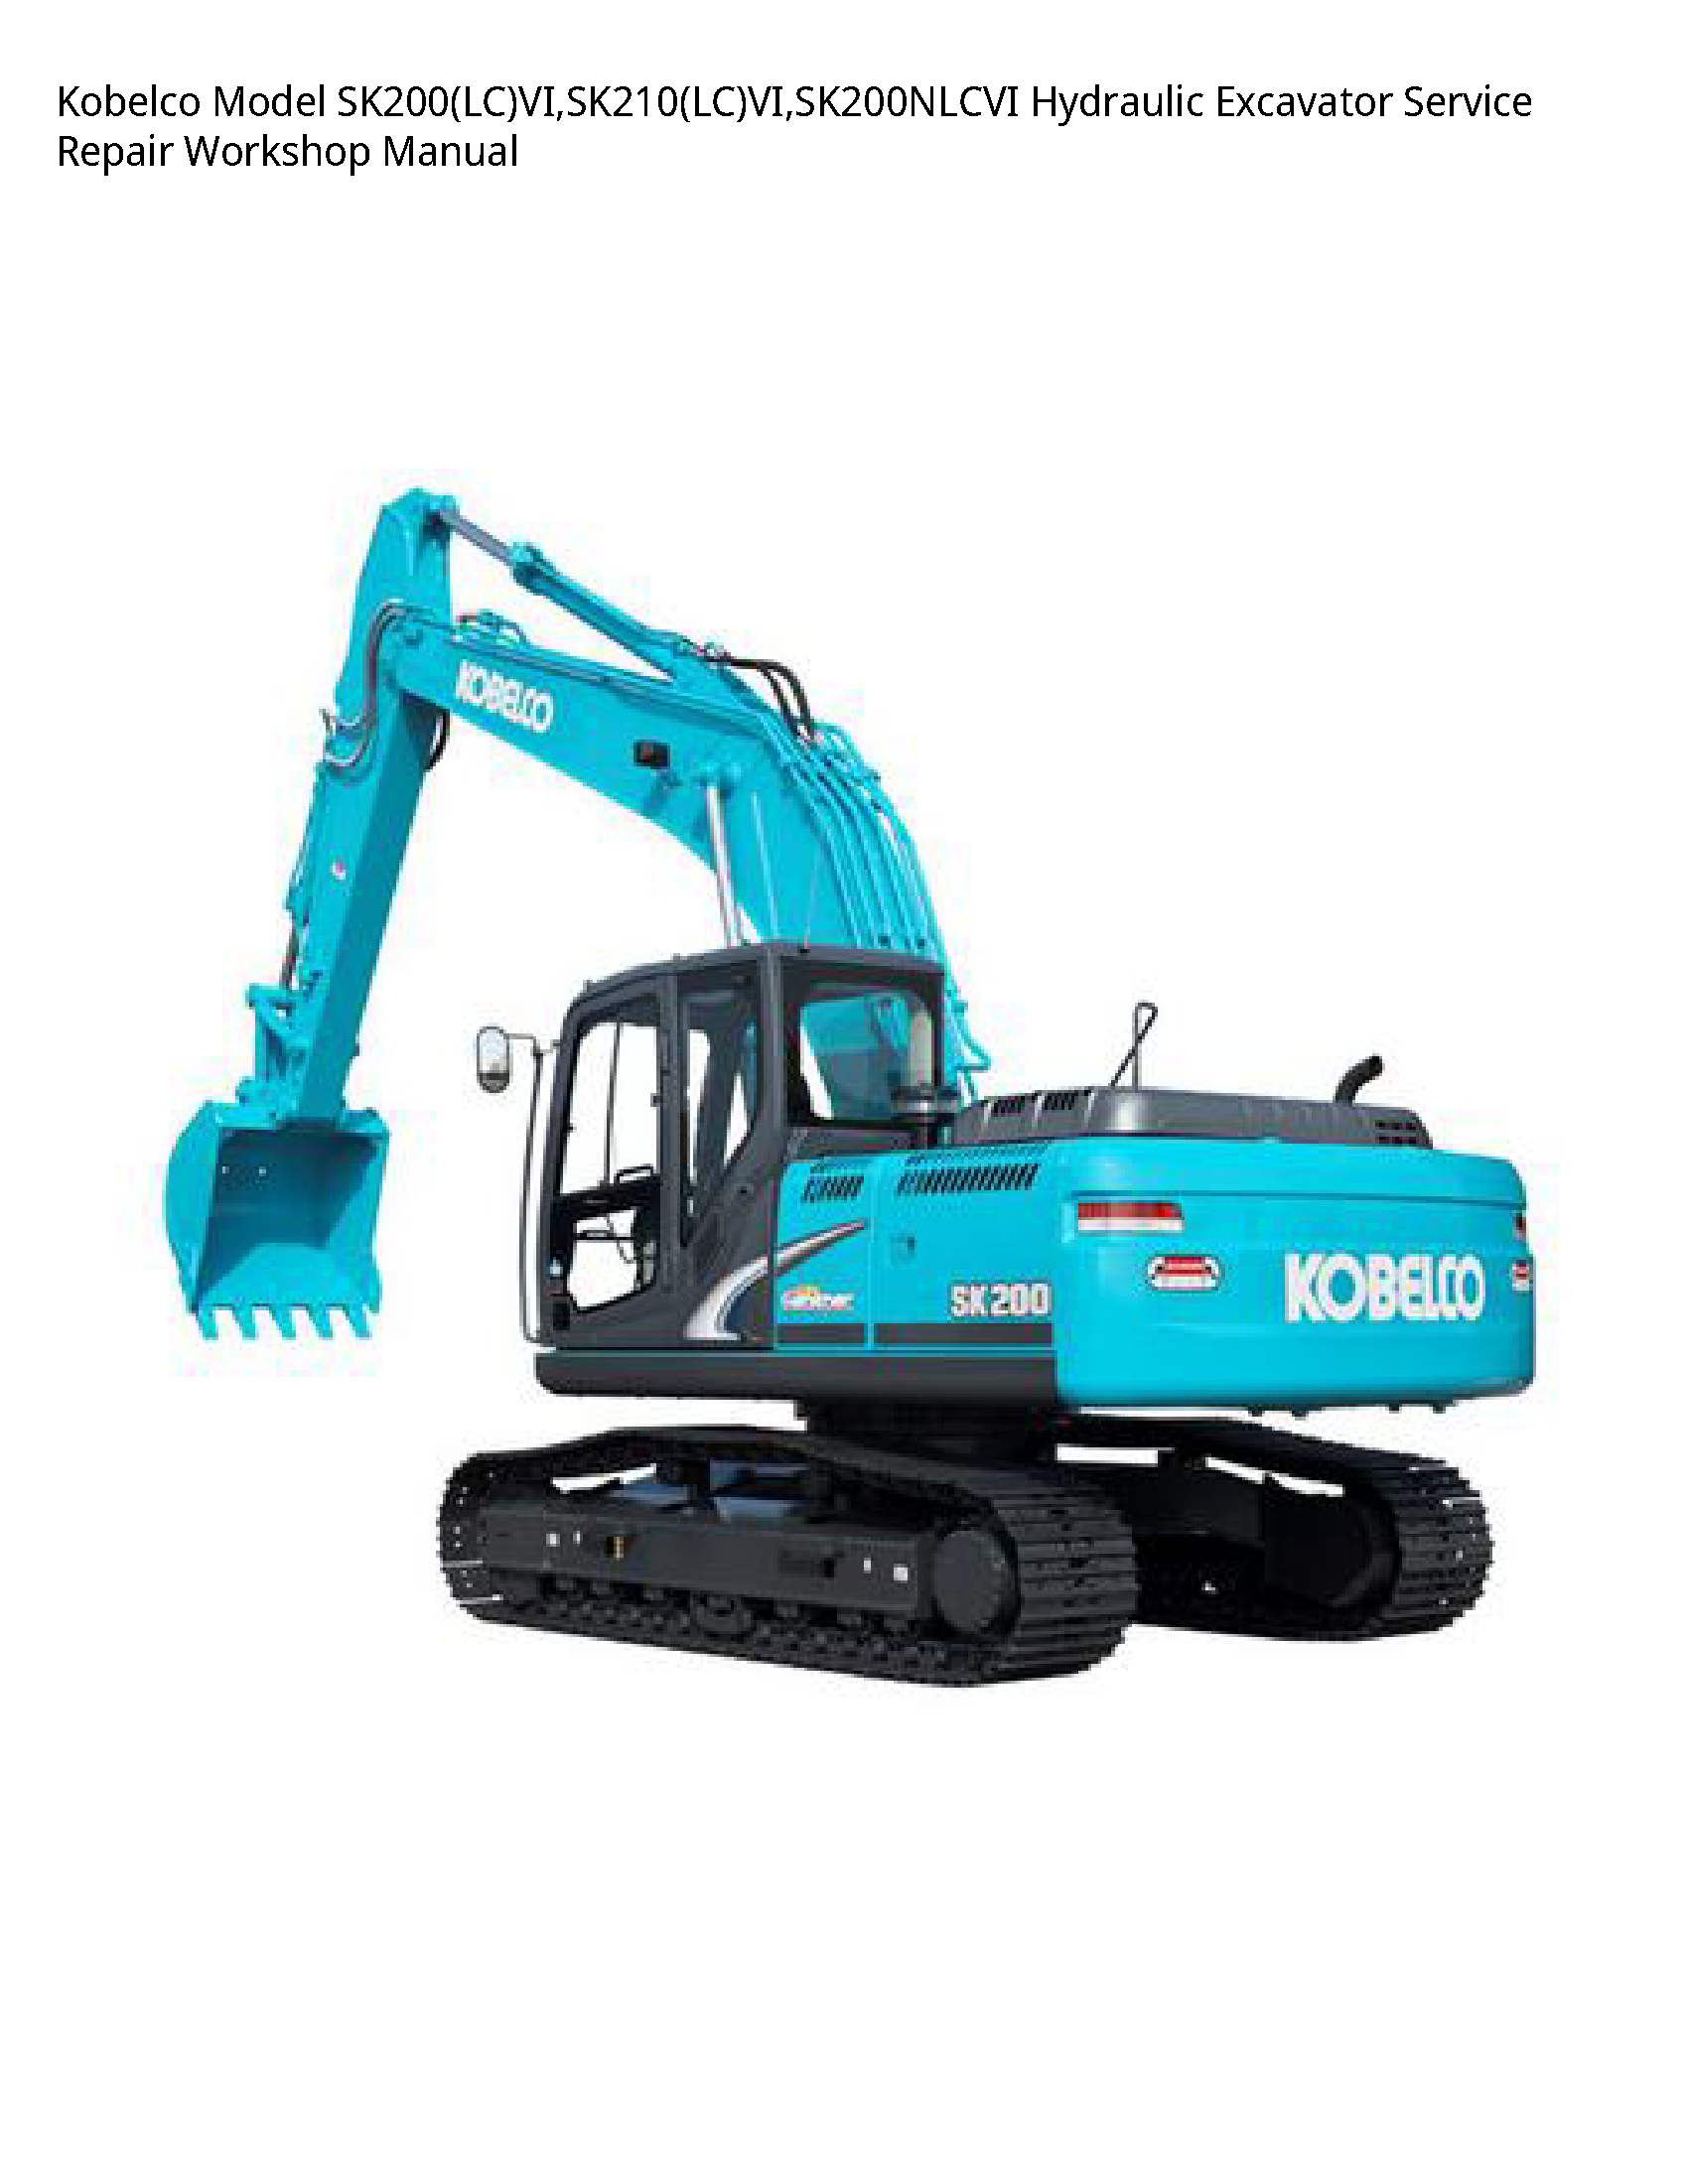 Kobelco SK200LCVI Model Hydraulic Excavator manual